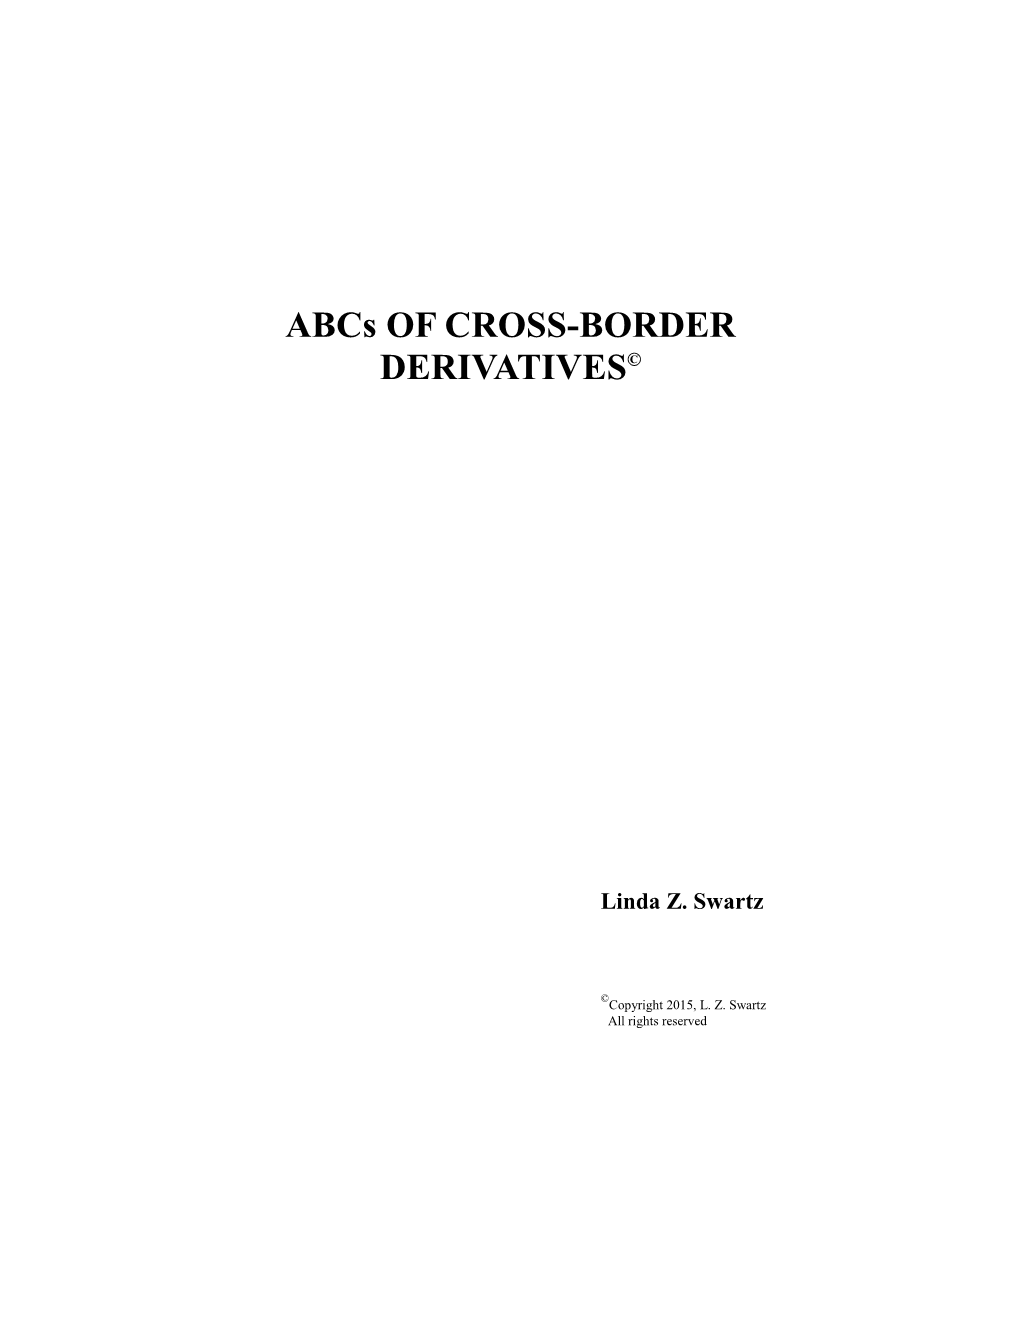 Abcs of CROSS-BORDER DERIVATIVES©